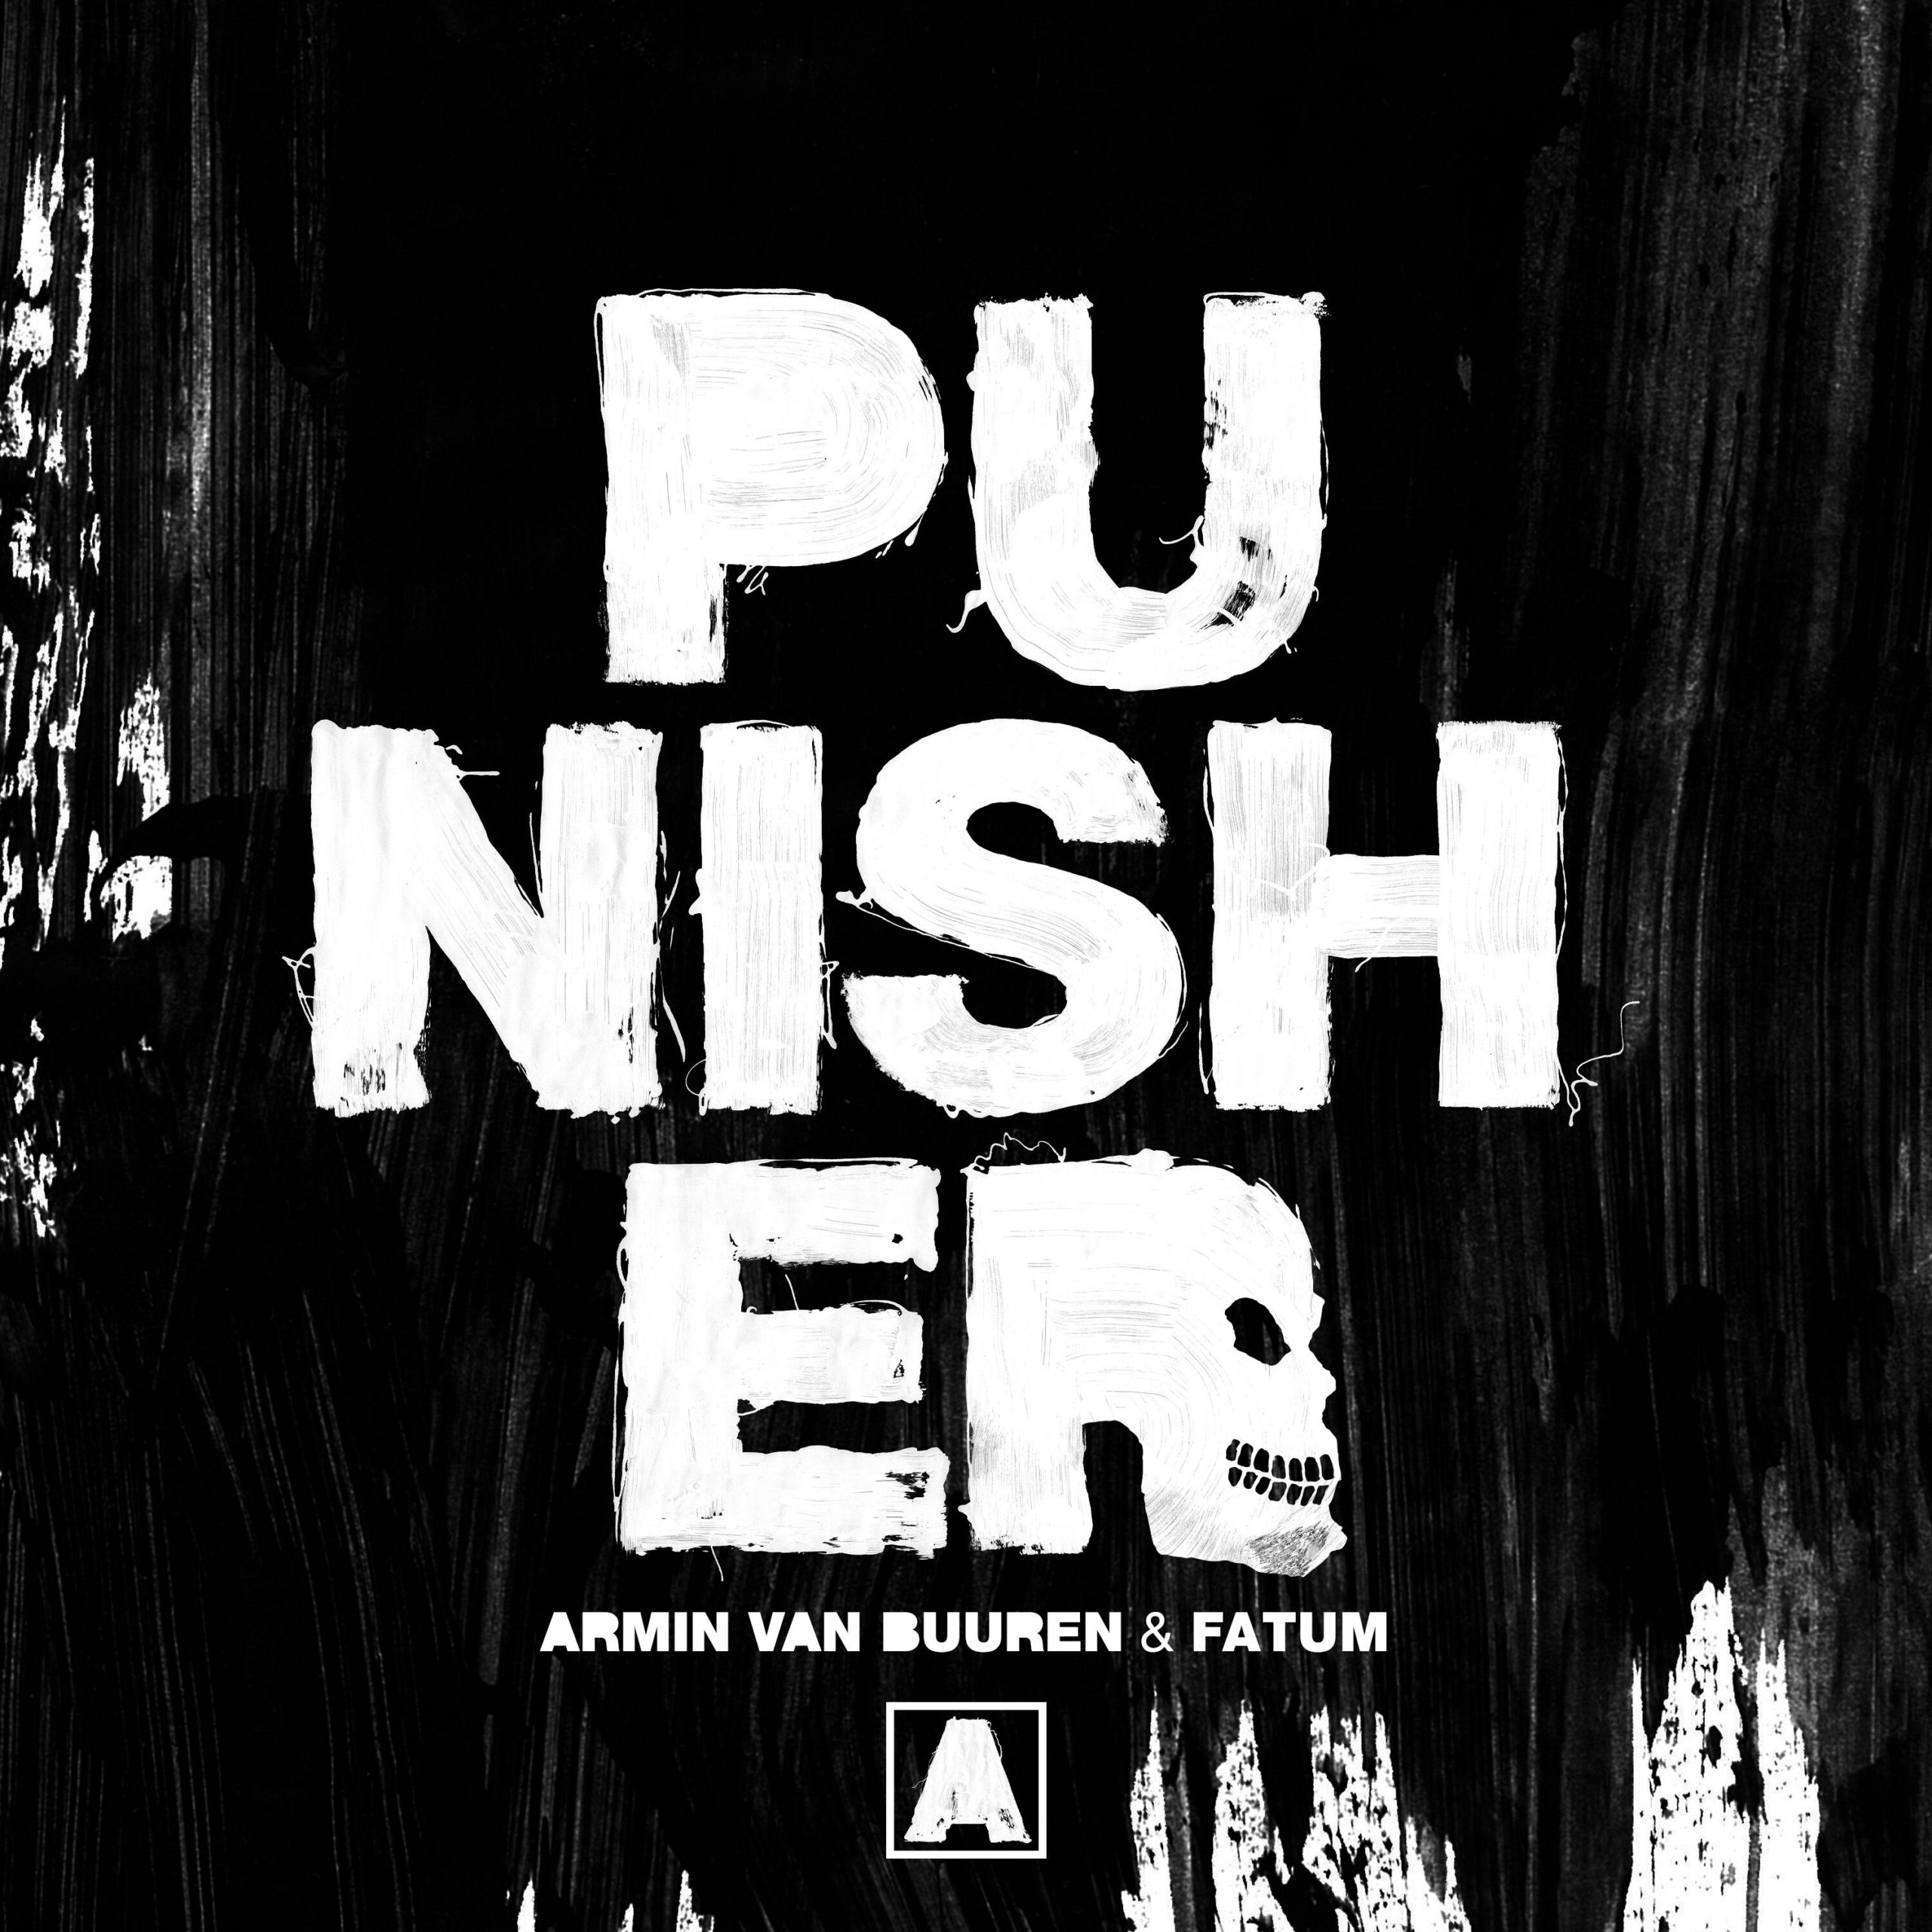 Armin van Buuren and Fatum presents Punisher on Armada Music